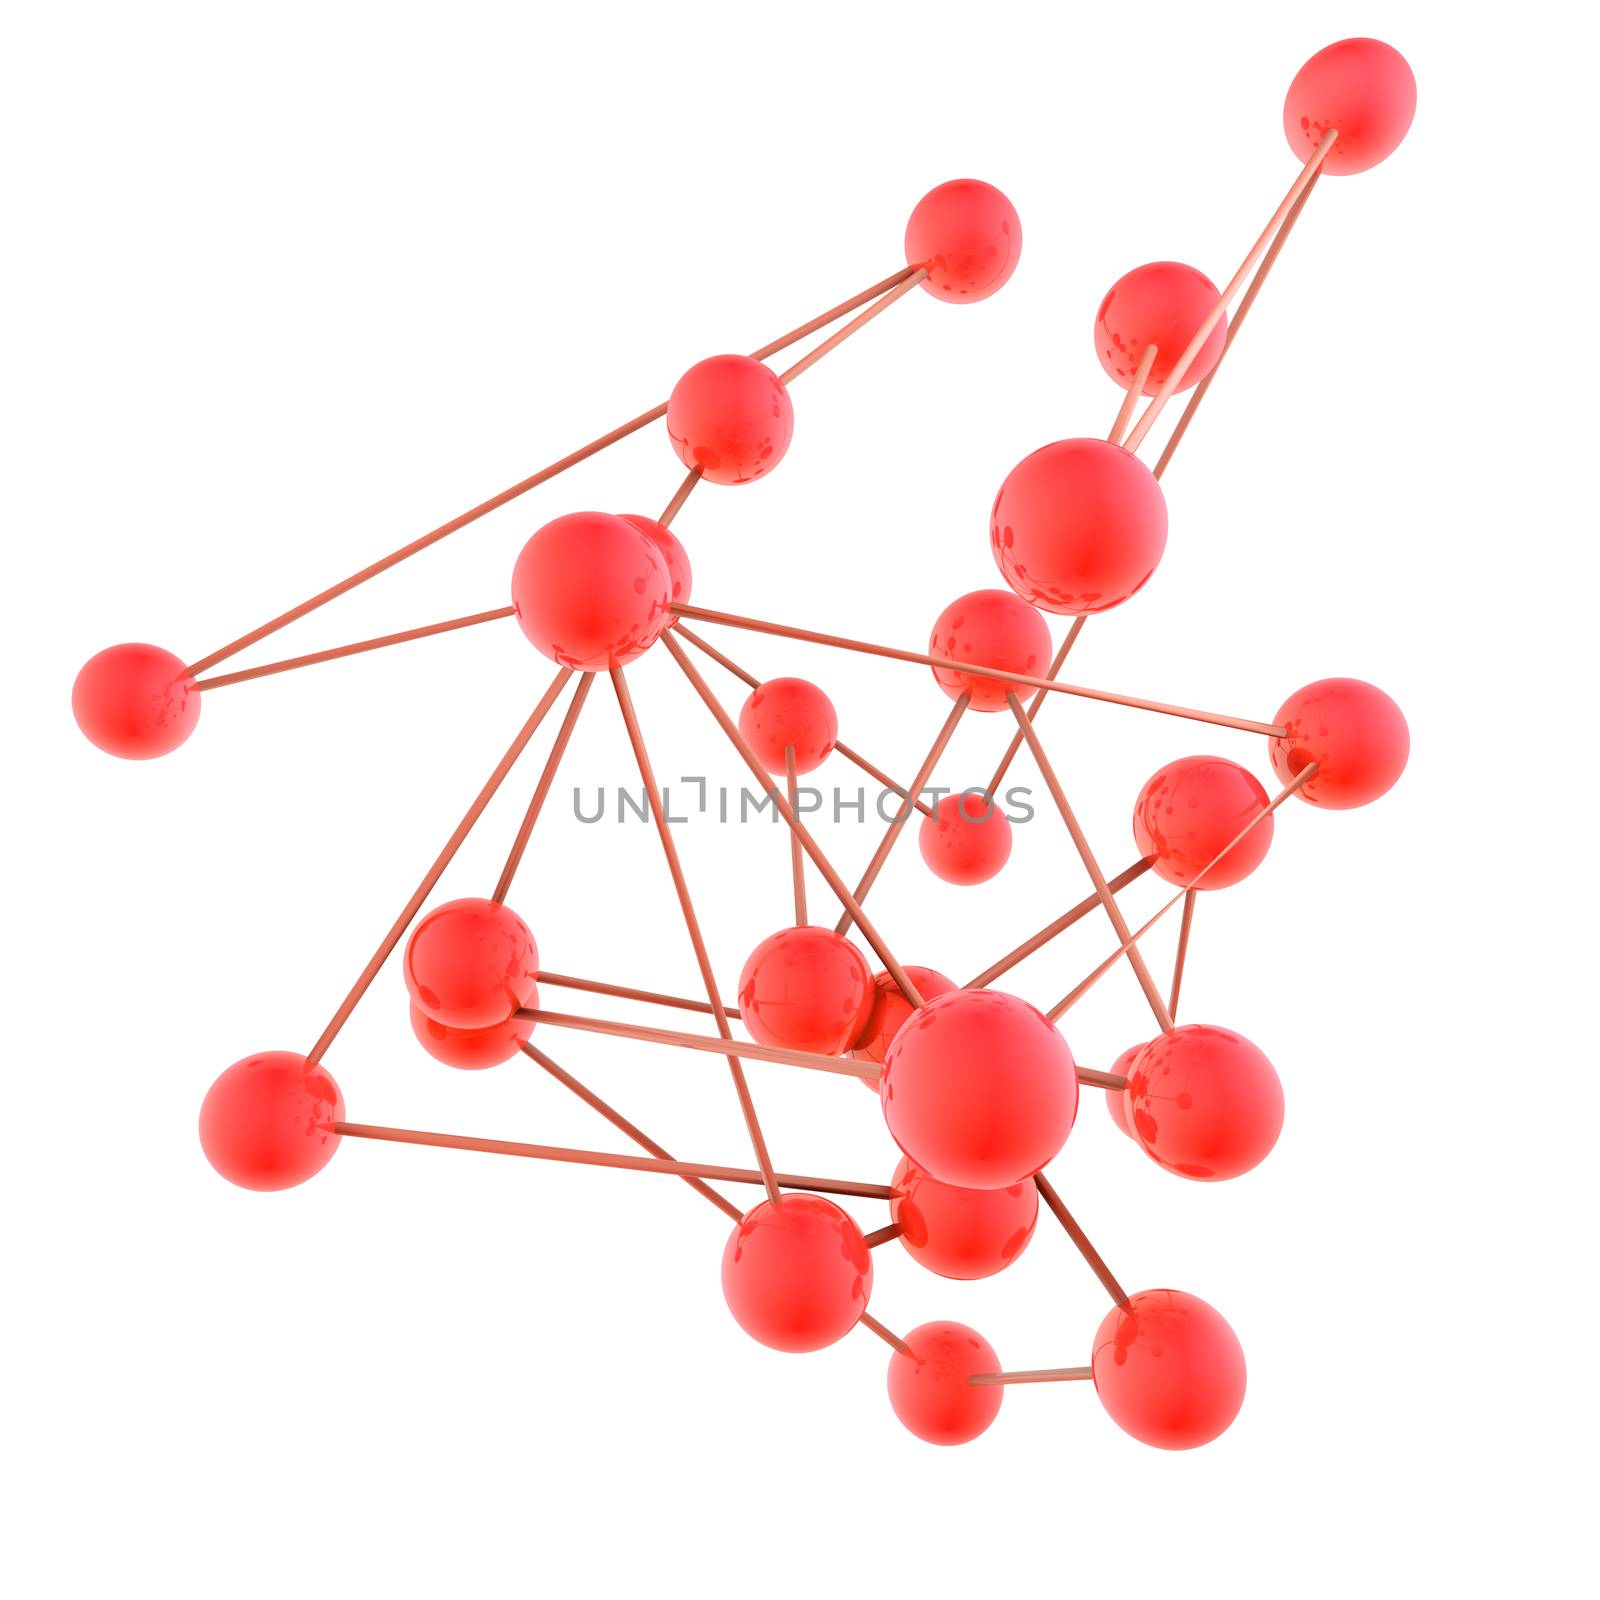 Networking concept by carloscastilla